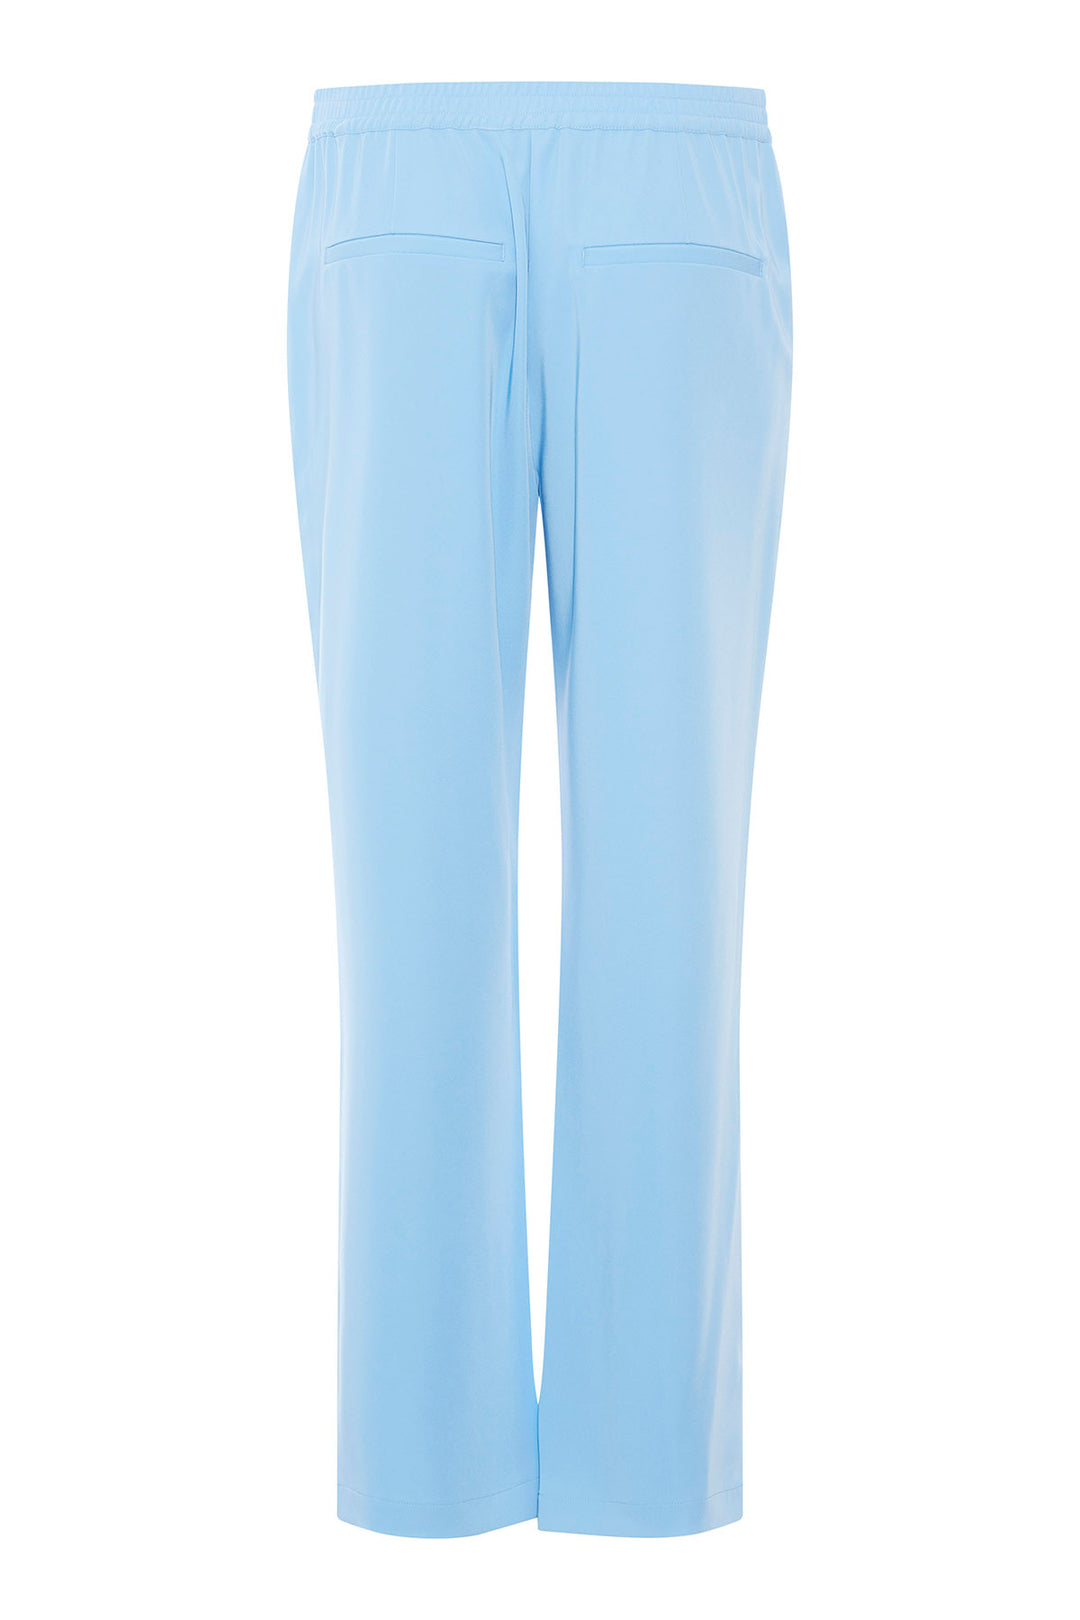 PBO Amalie pants TROUSERS 227 Heritage blue